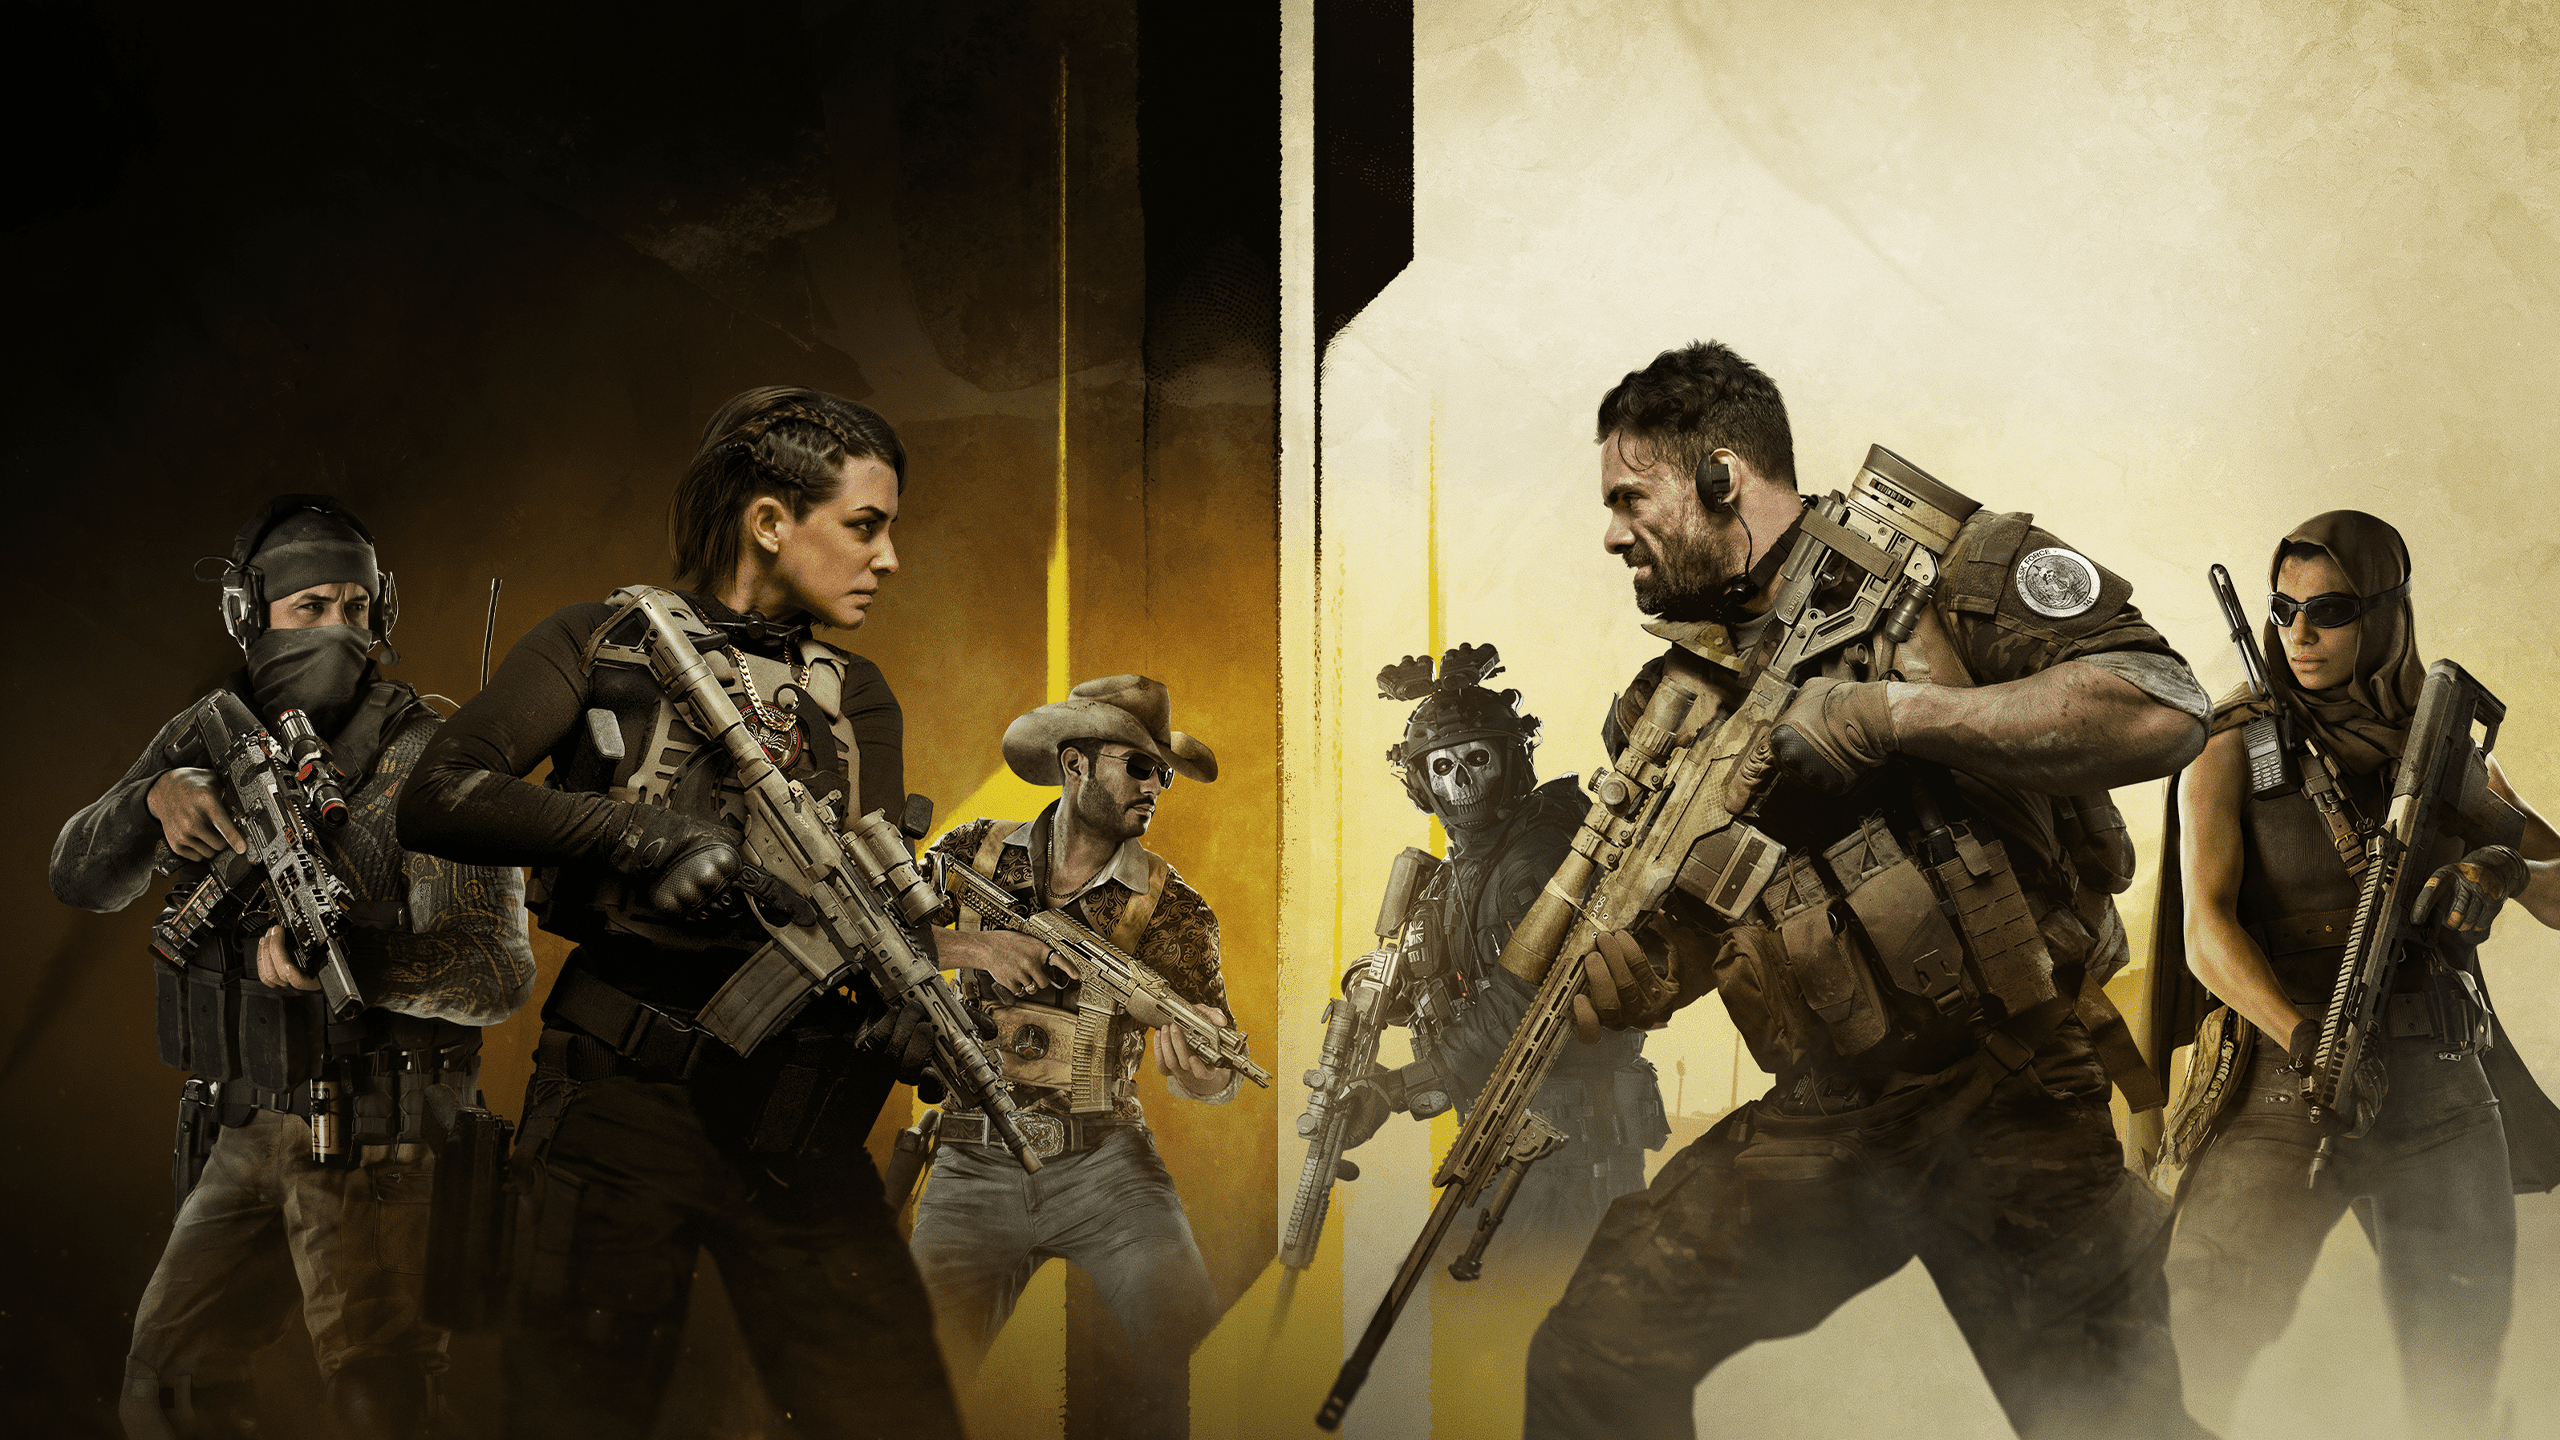 Video Game Call of Duty: Modern Warfare II HD Wallpaper | Background Image